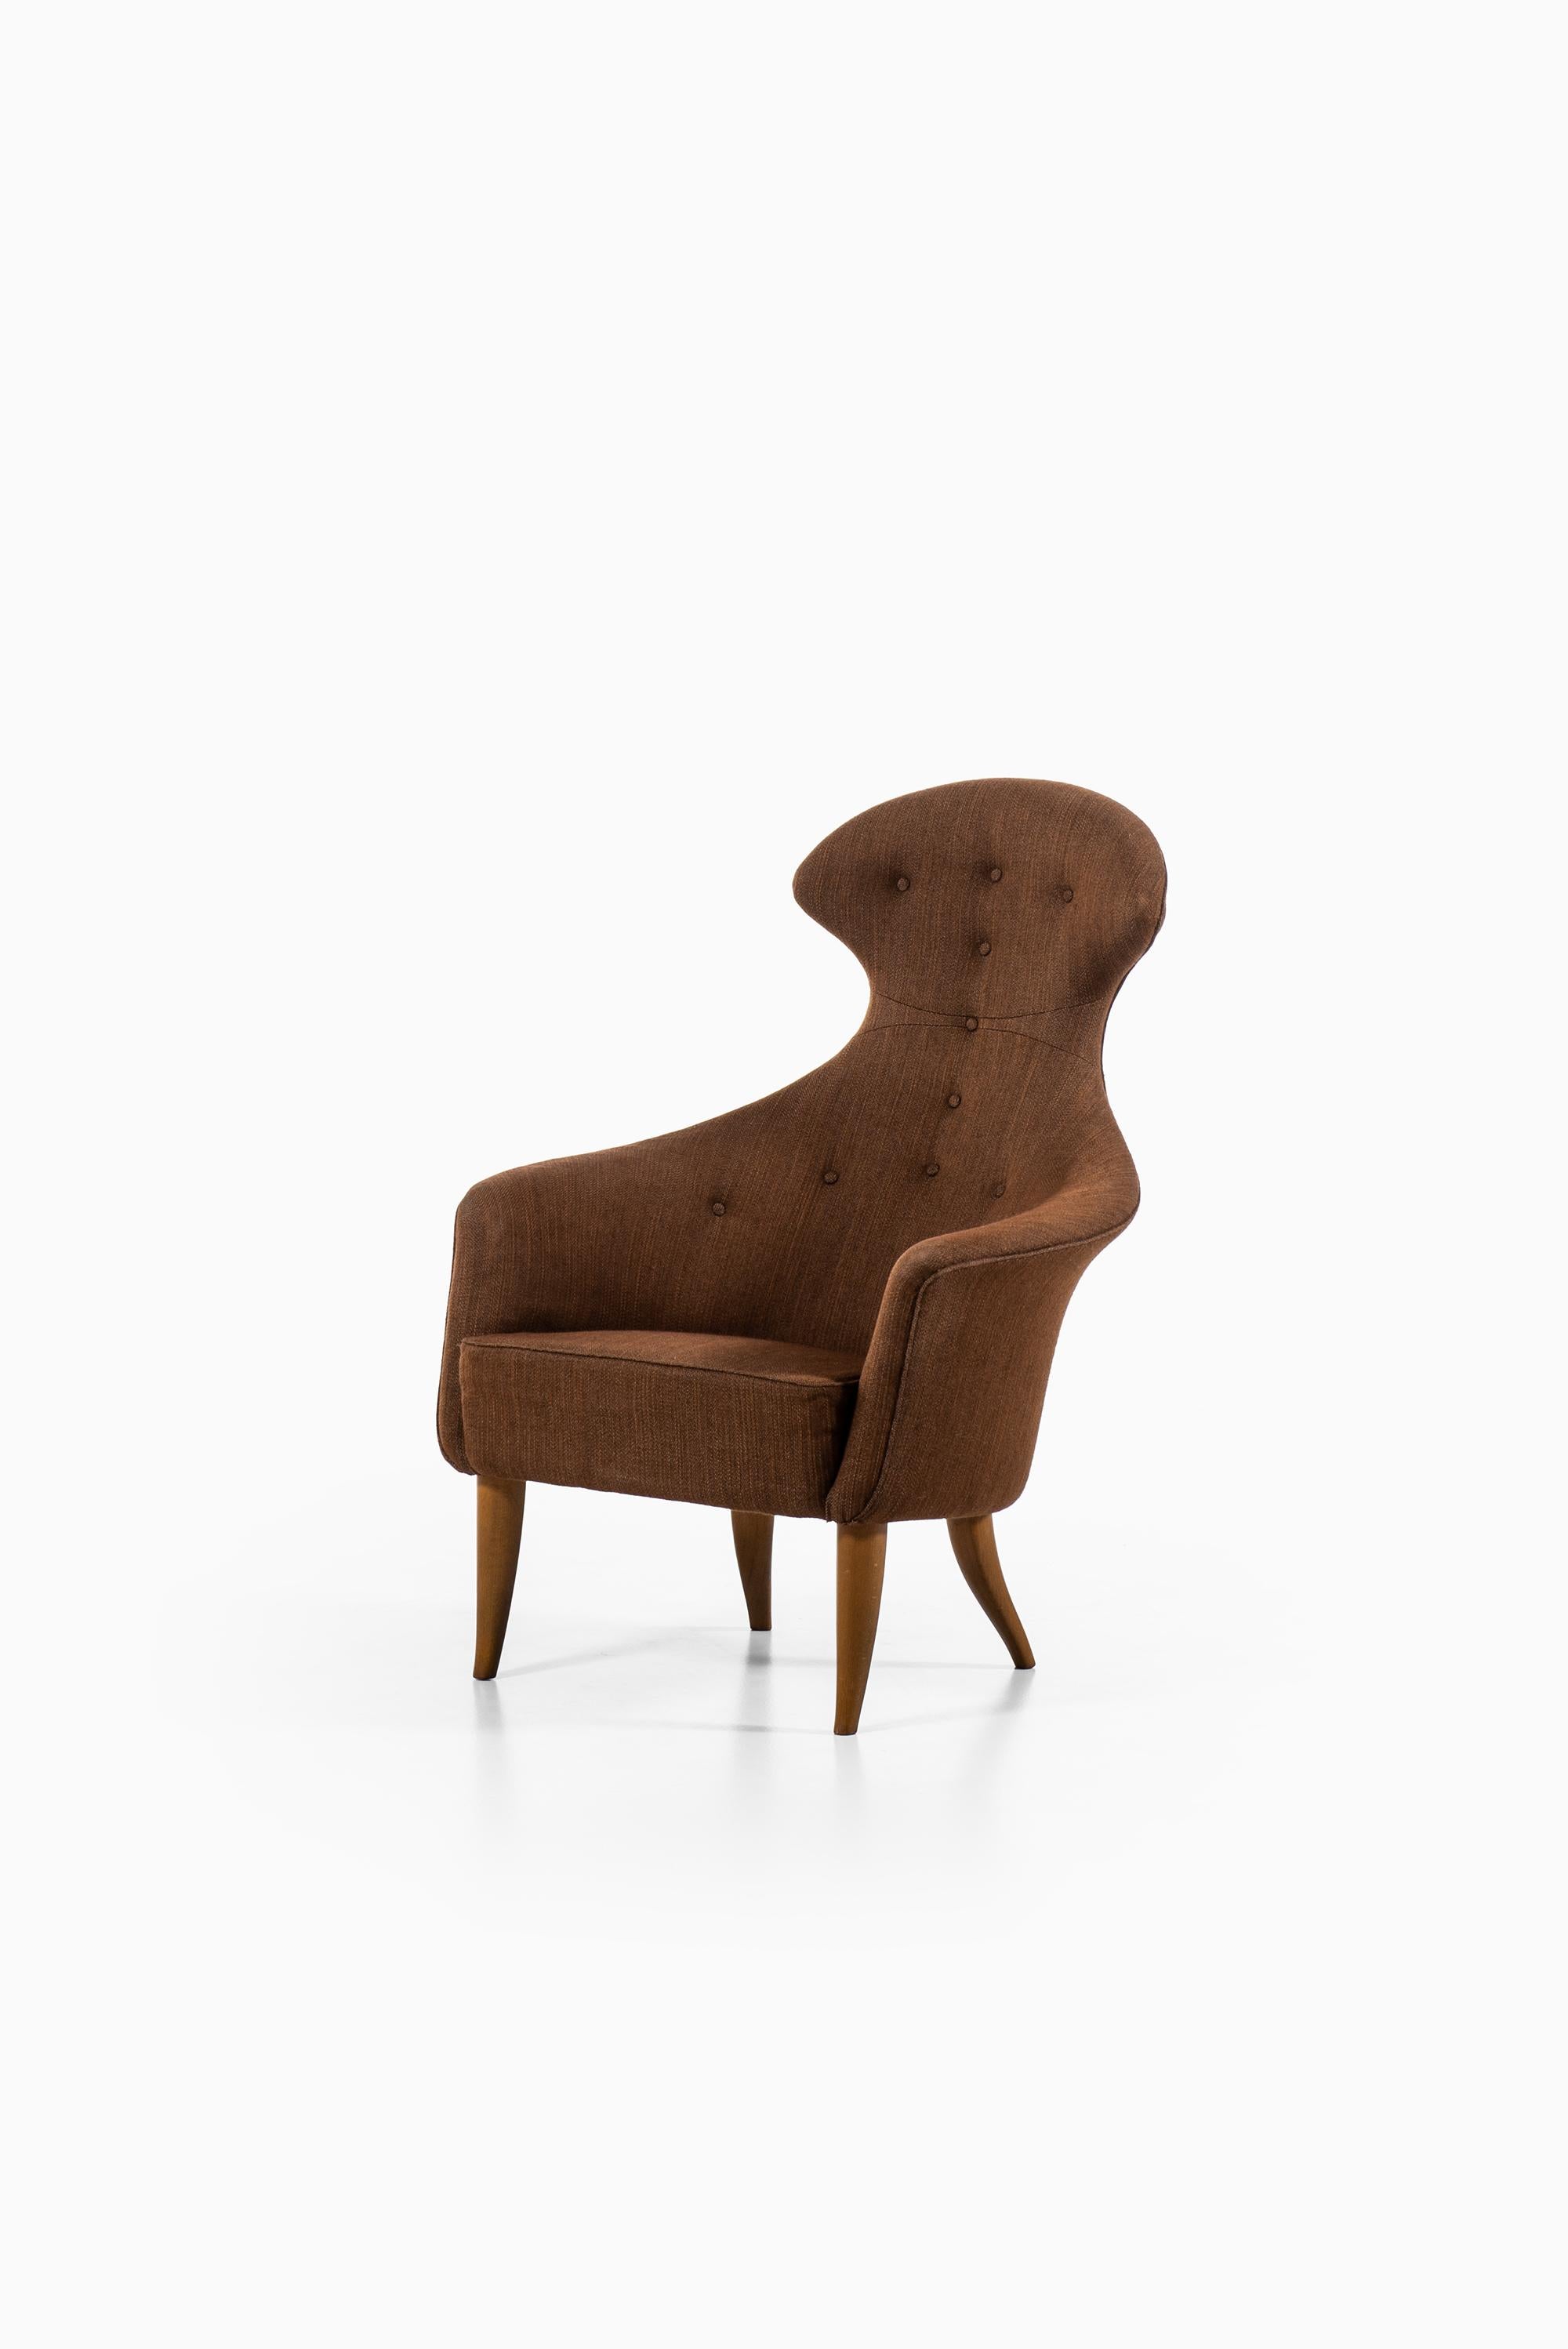 Rare easy chair model Stora Eva designed by Kerstin Hörlin-Holmquist. Produced by Nordiska Kompaniet (NK) in Sweden.